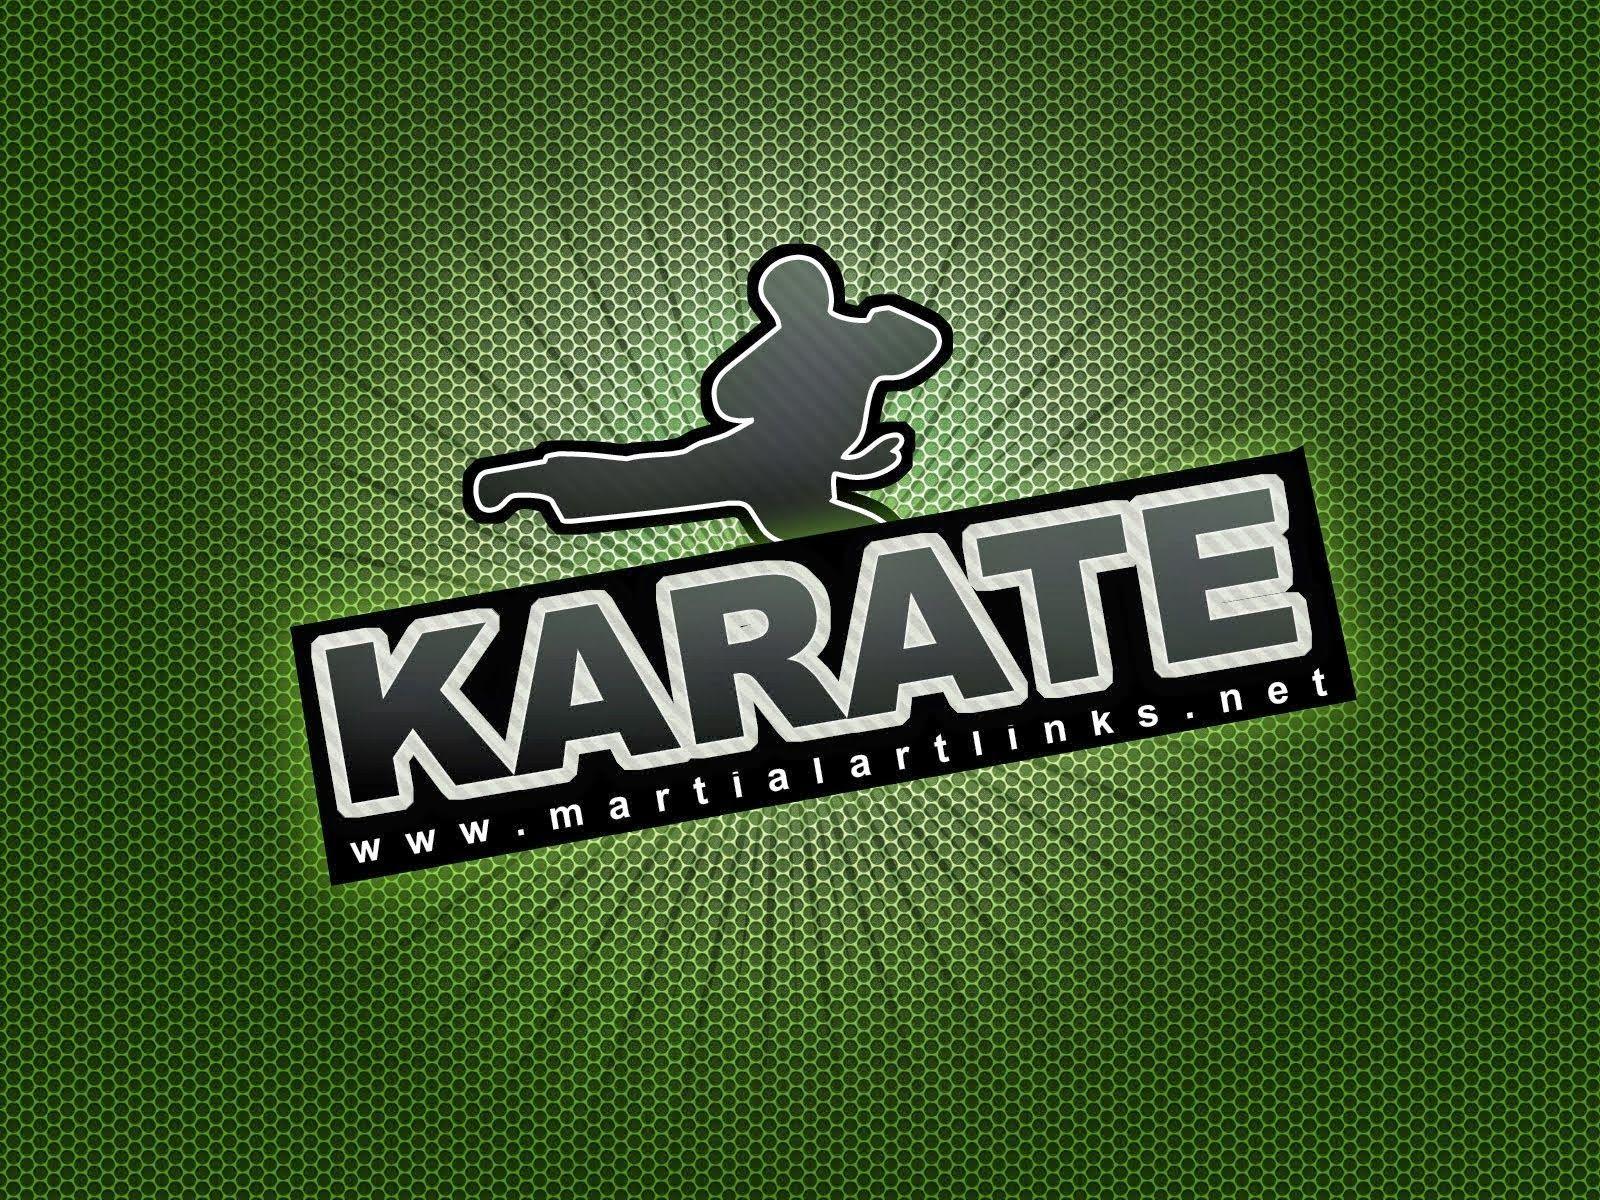 Karate Pekanbaru